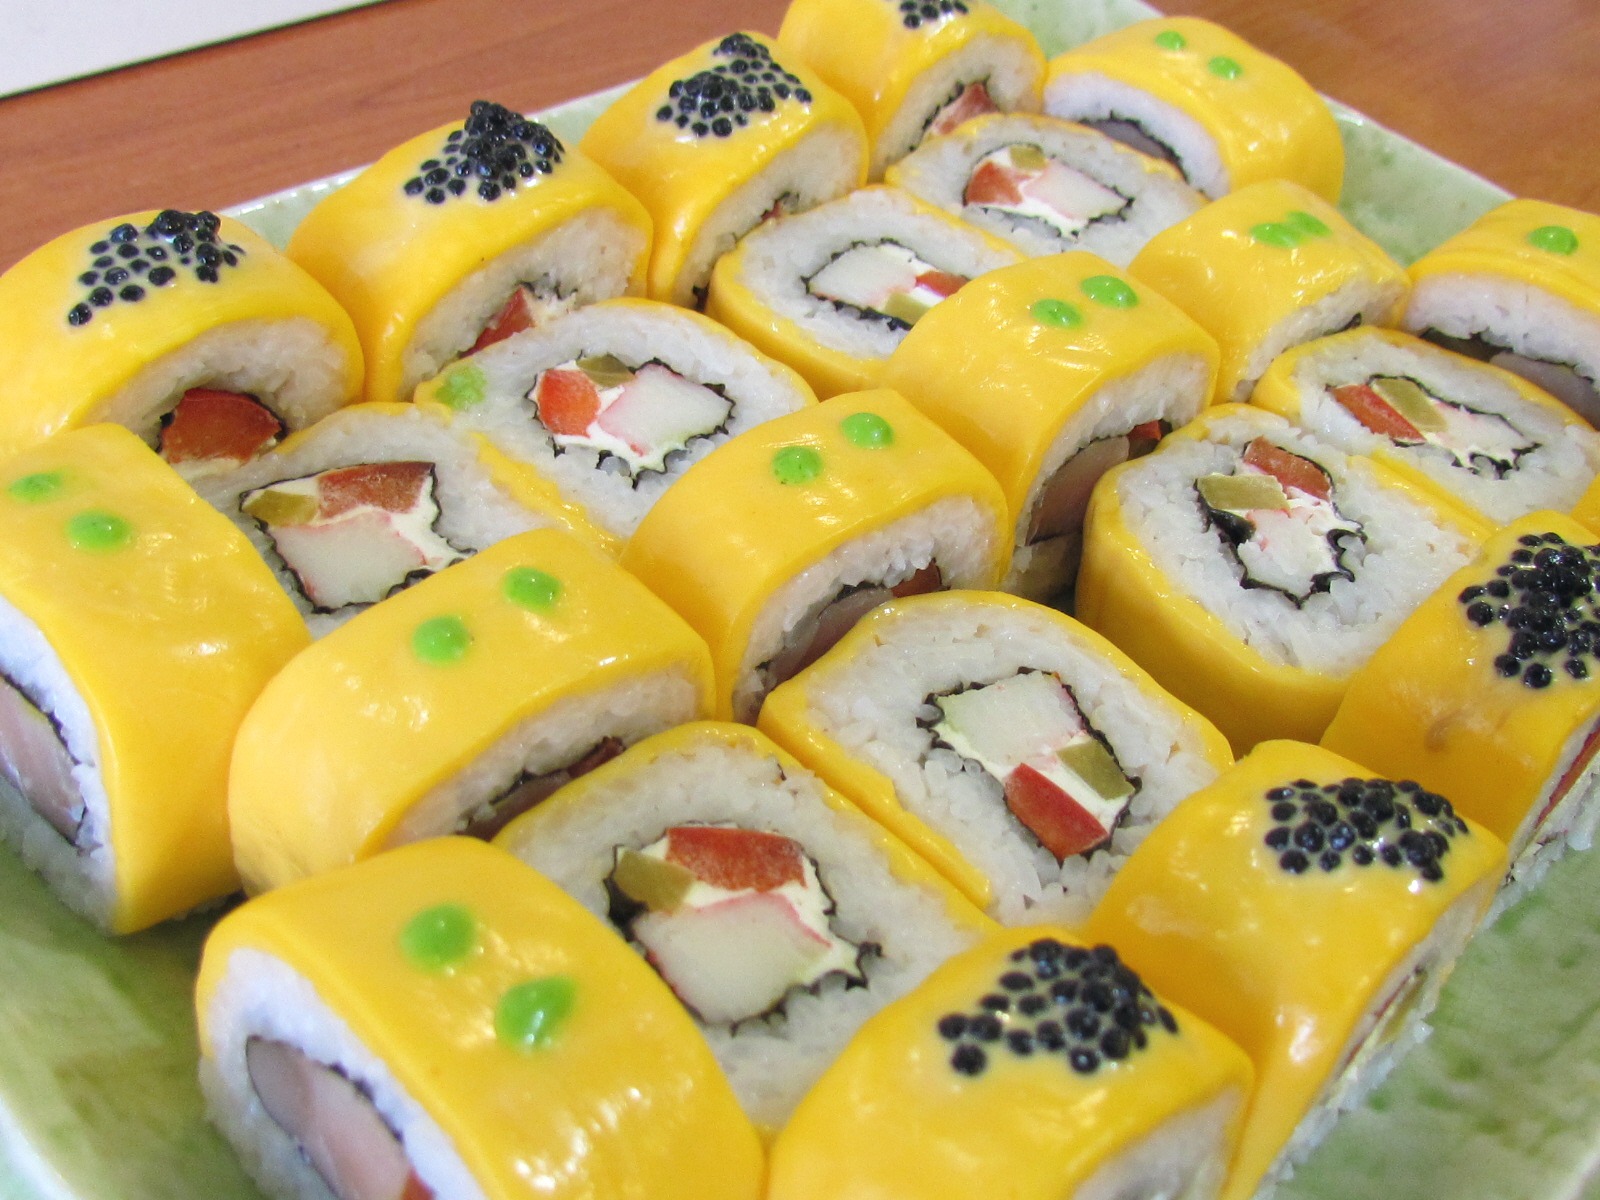 Daikon in salamoia per sushi